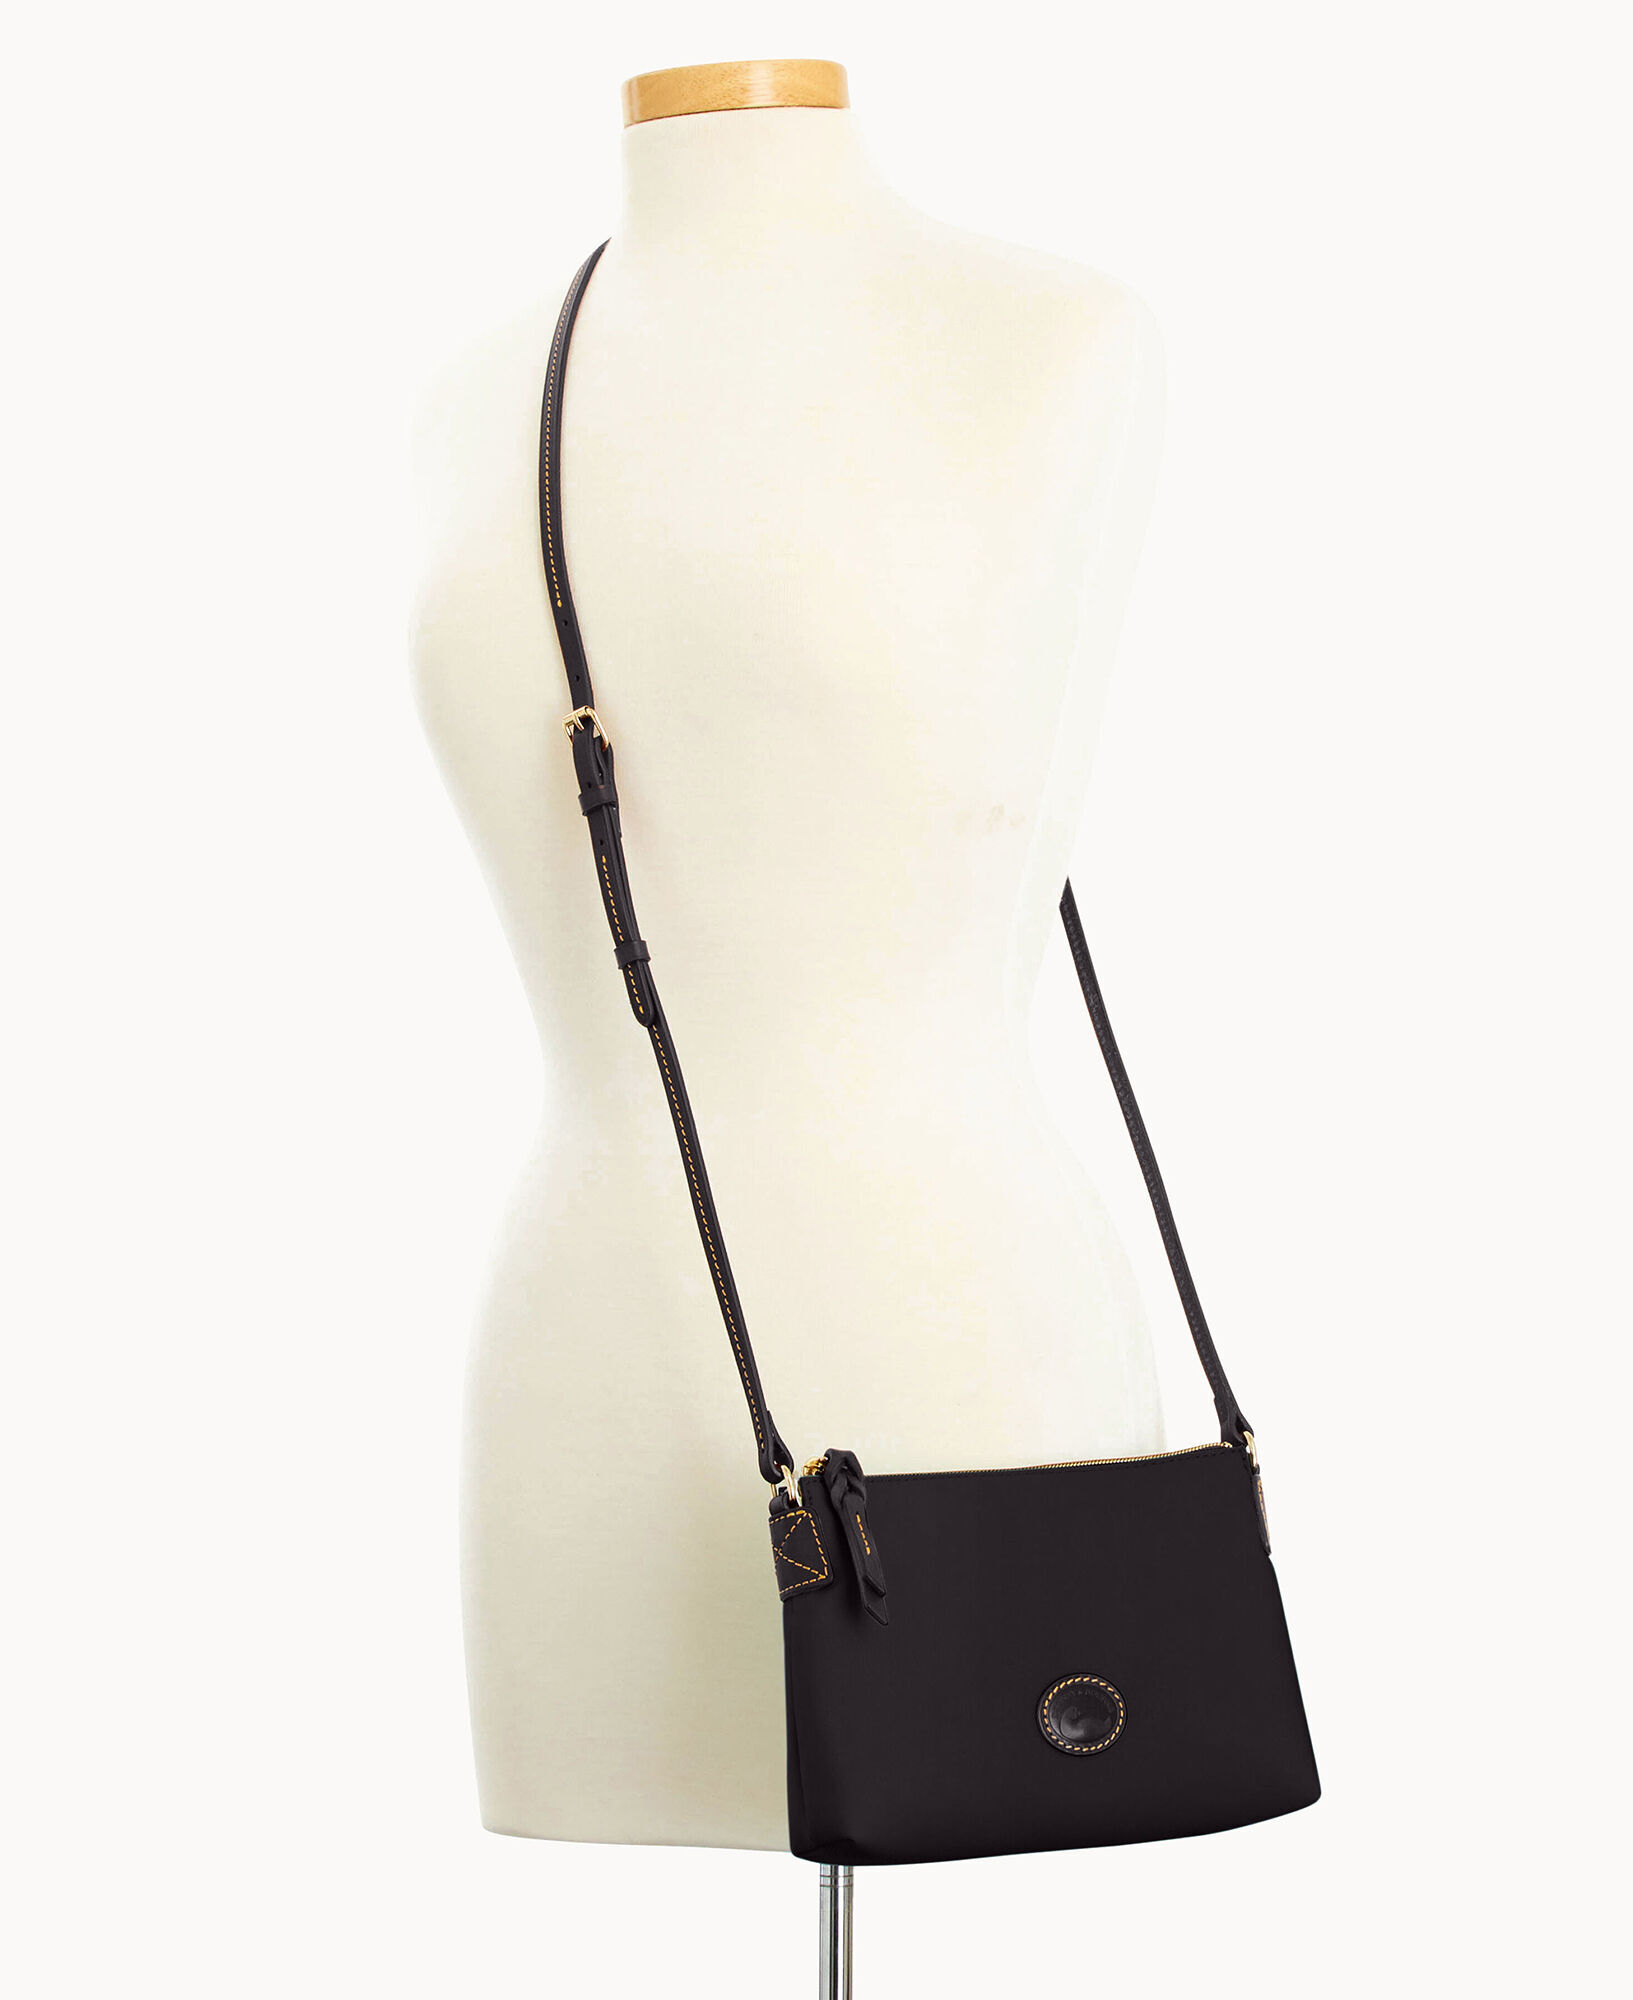 Dooney Bourke Saffiano Collection Pouchette Crossbody Bag - Black